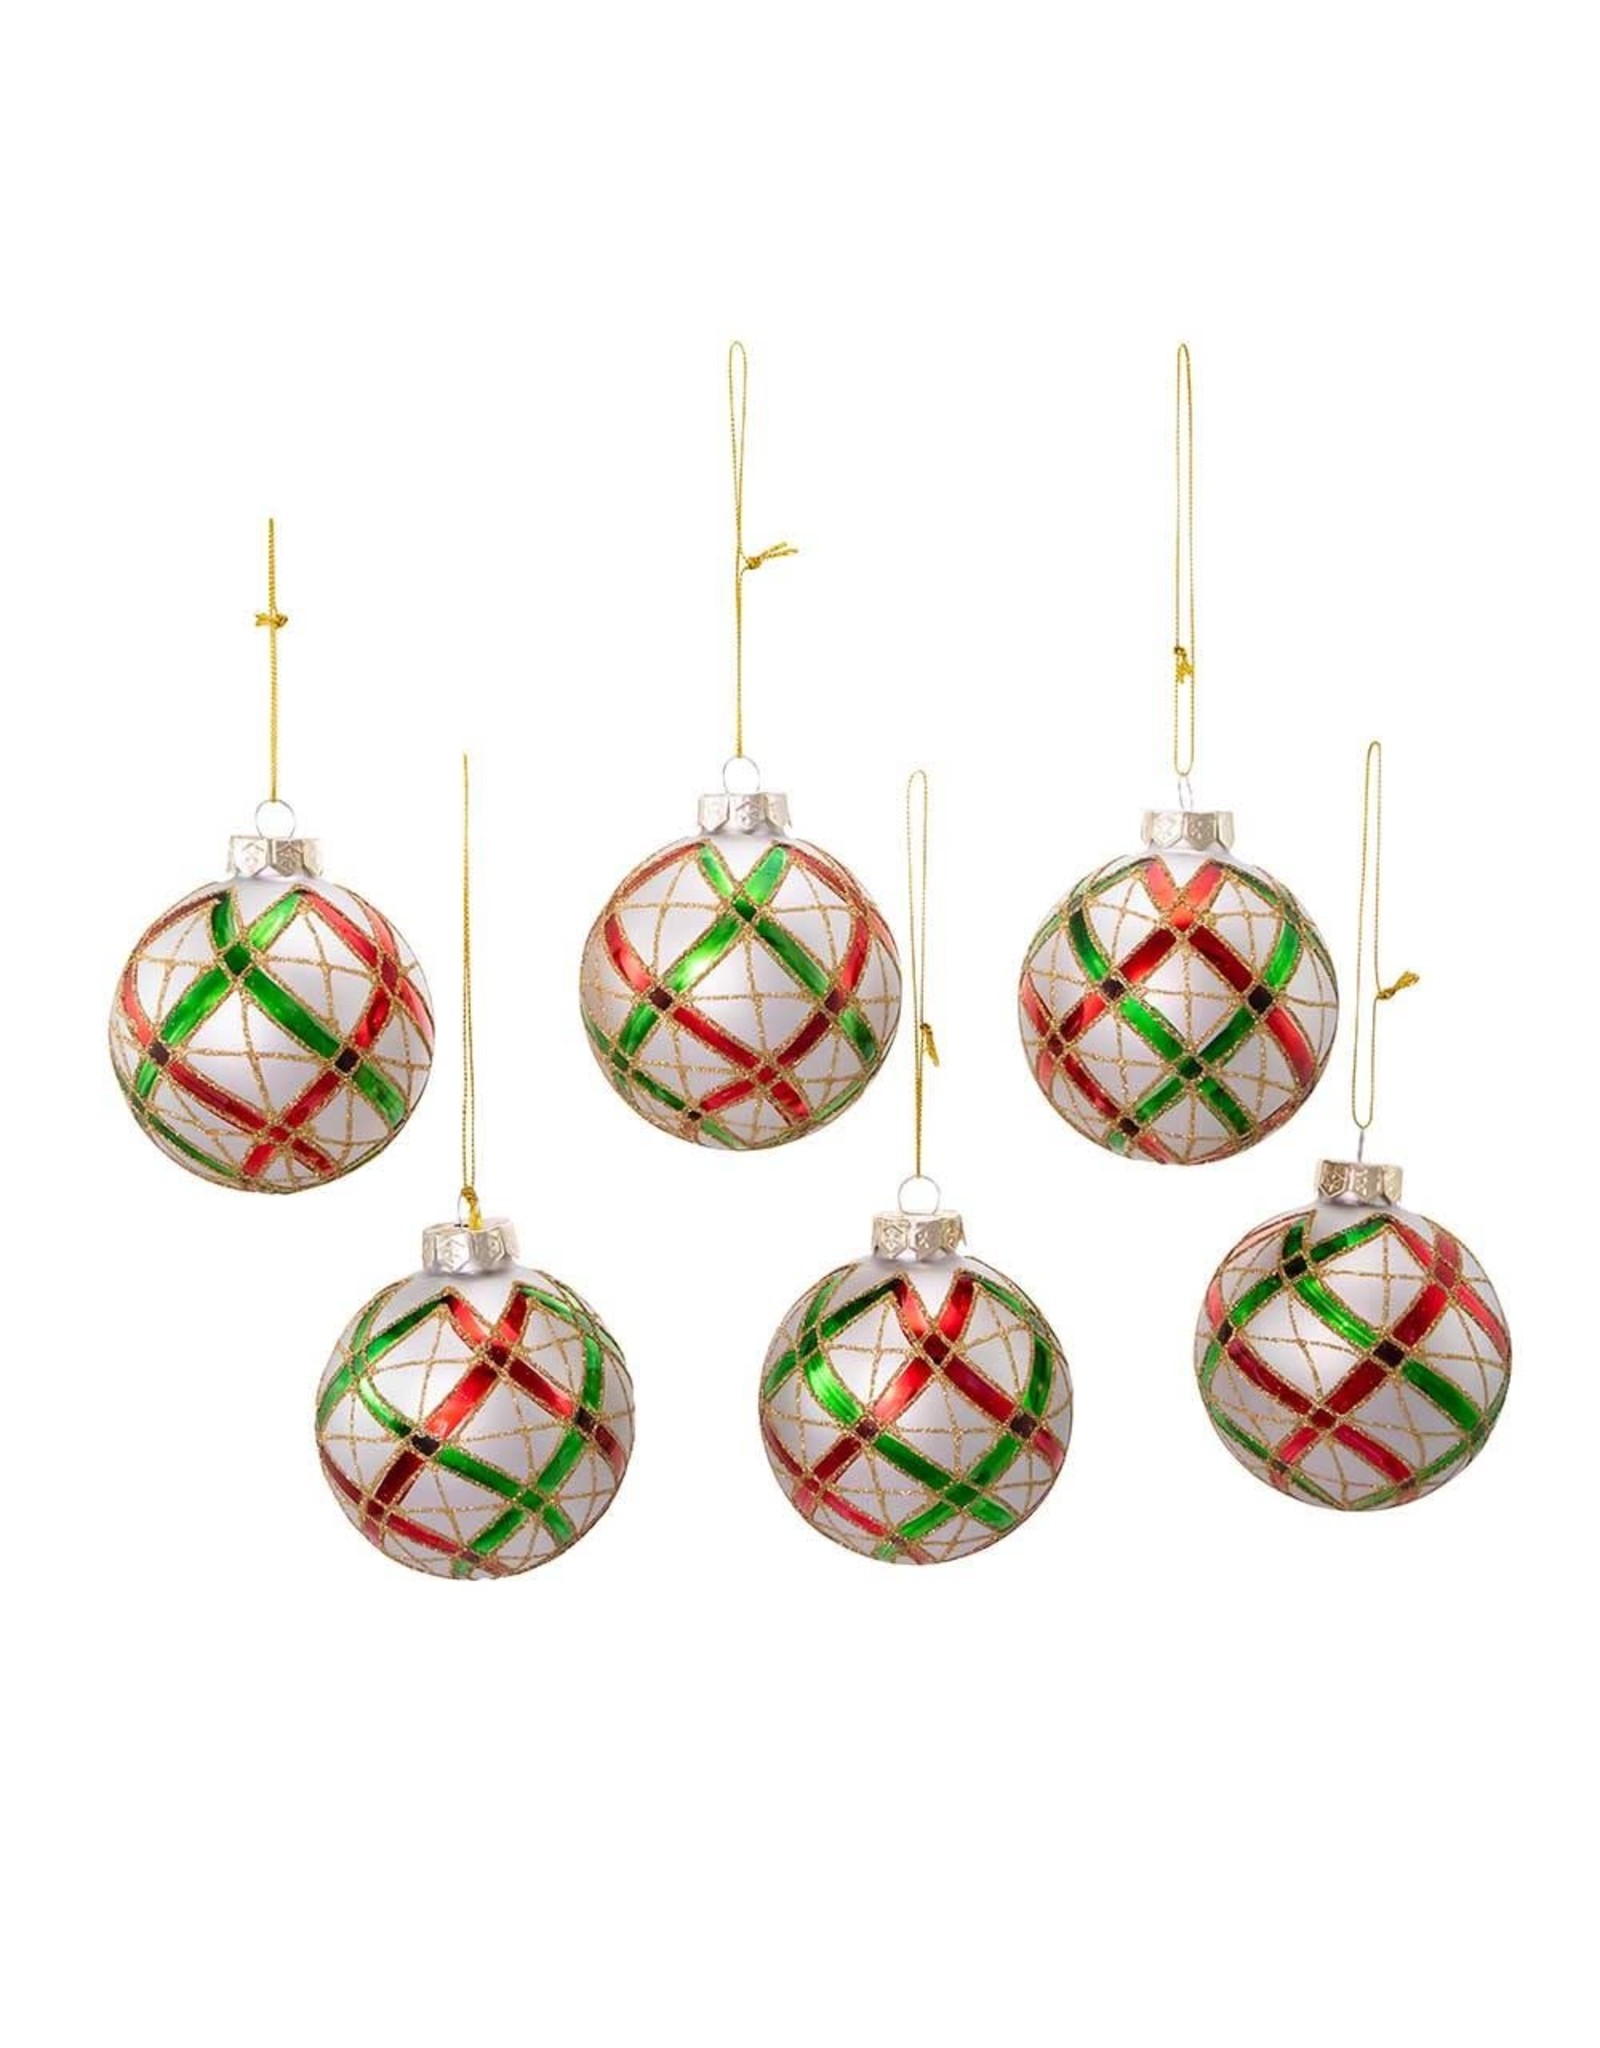 Kurt Adler Plaid Red Green Gold on Silver Glass Ball Ornaments Set 6